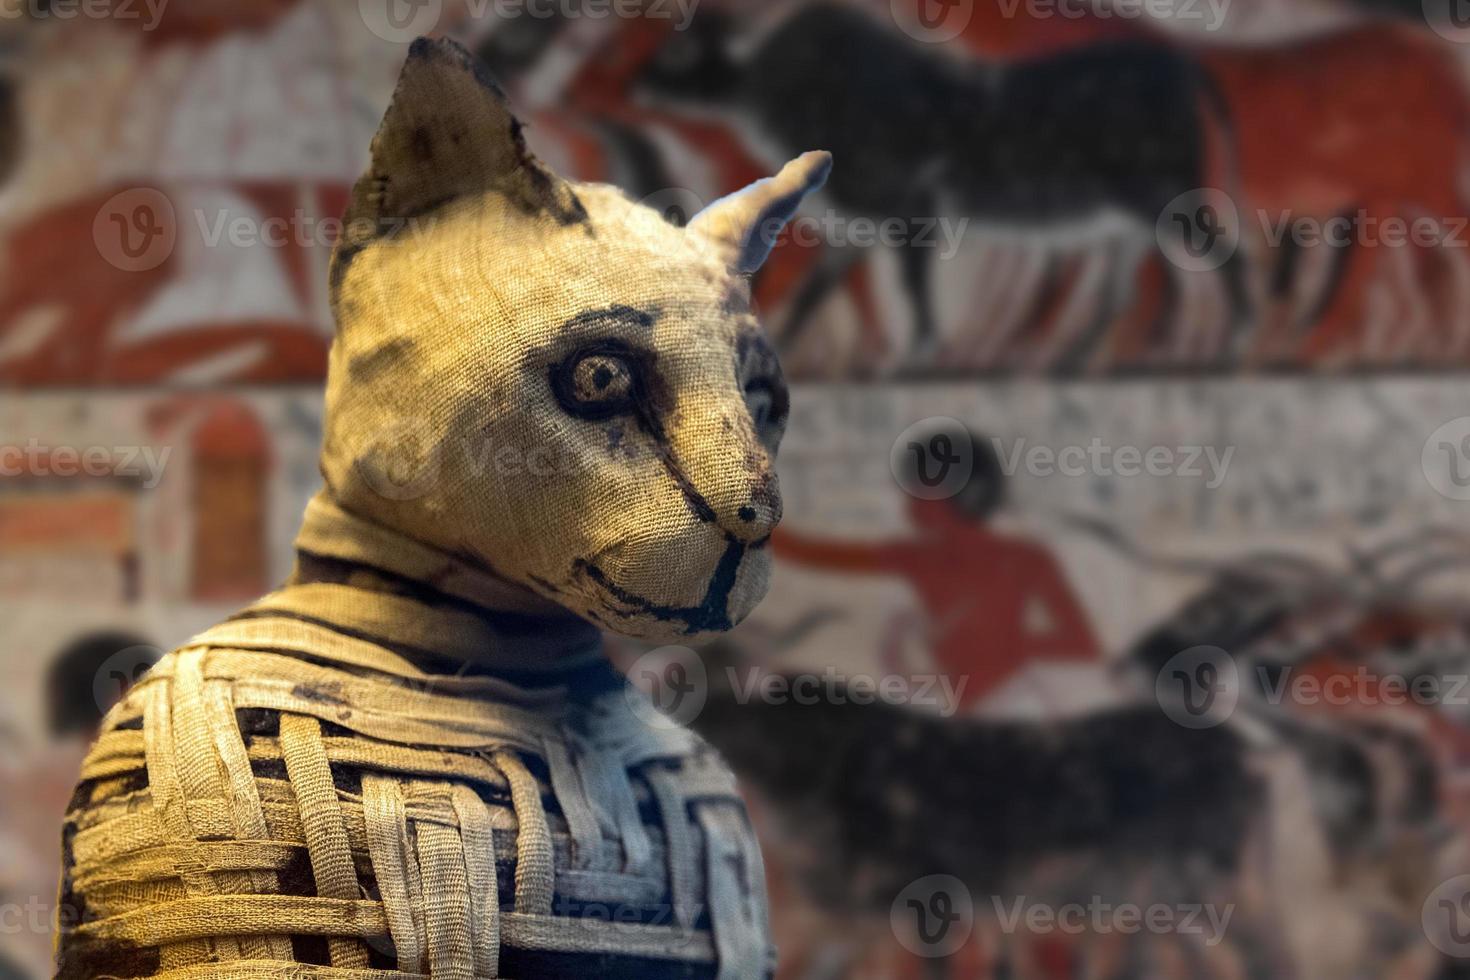 egyptian mummy cat found inside tomb photo